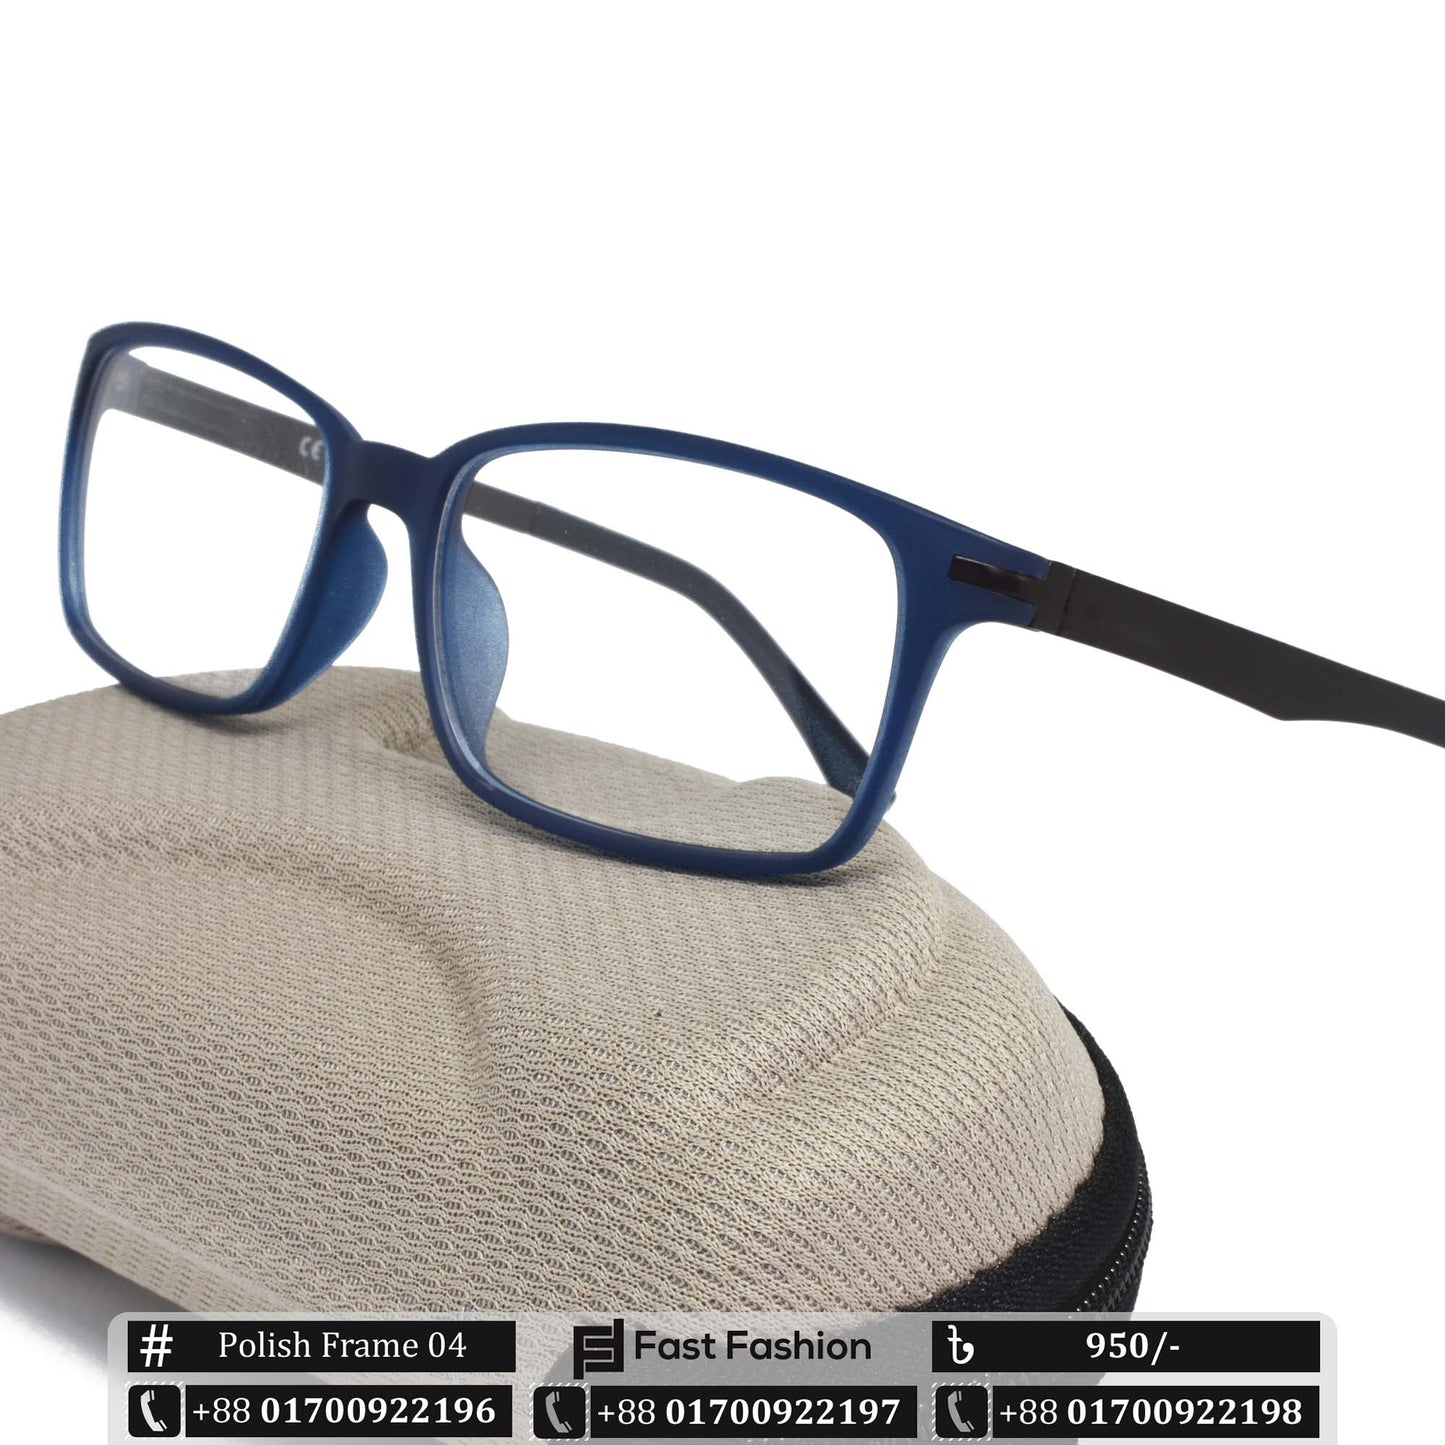 Trendy Stylish Optic Frame | Polish Frame 04 | Premium Quality